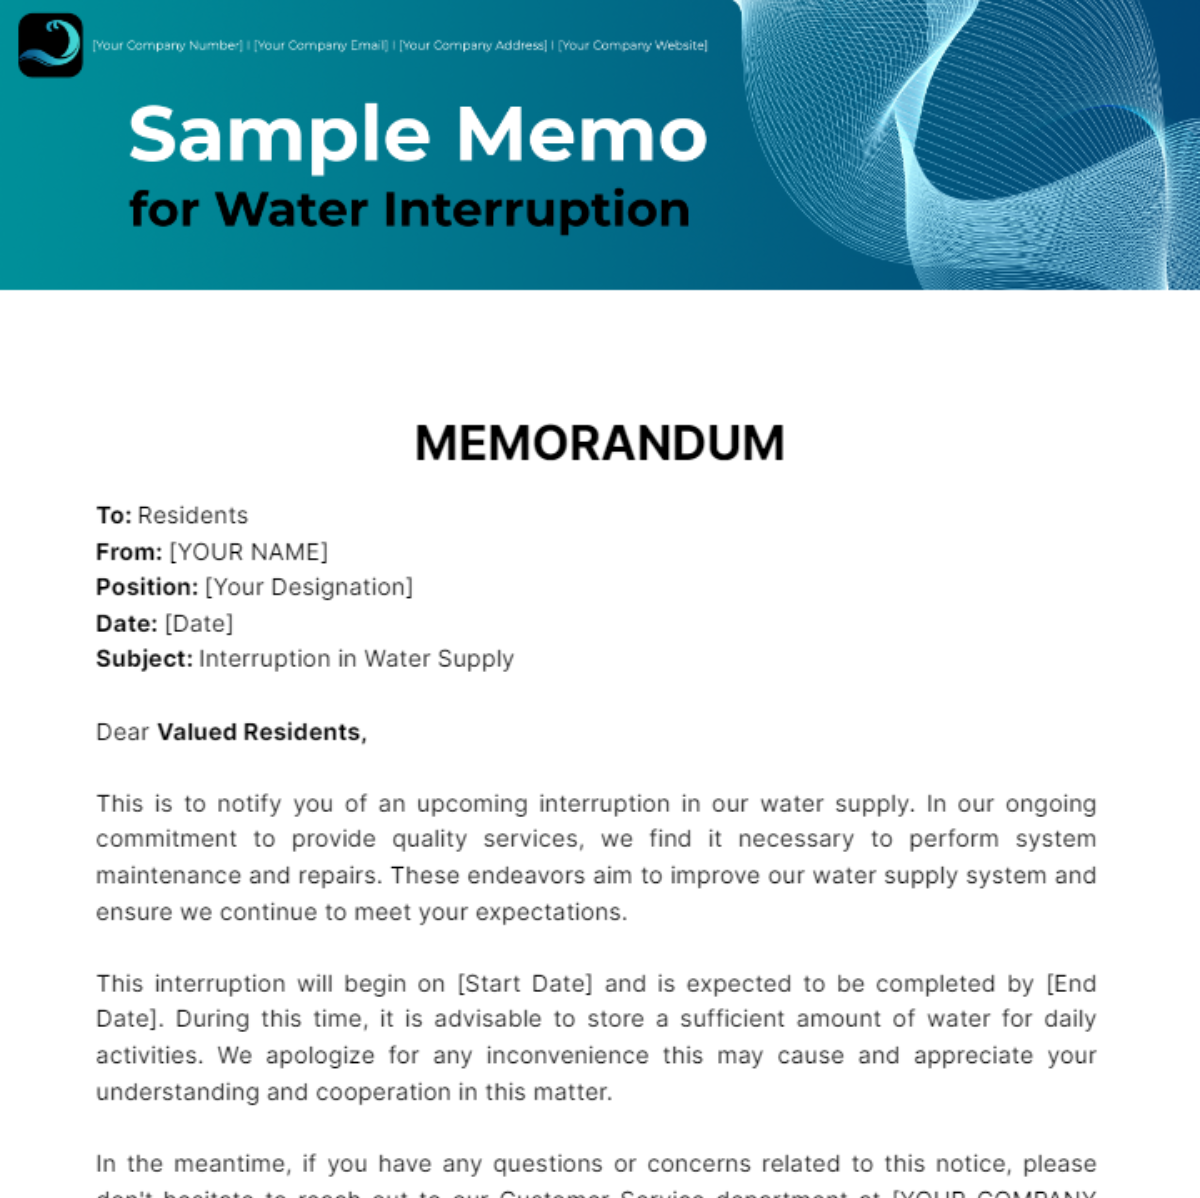 Sample Memo for Water Interruption